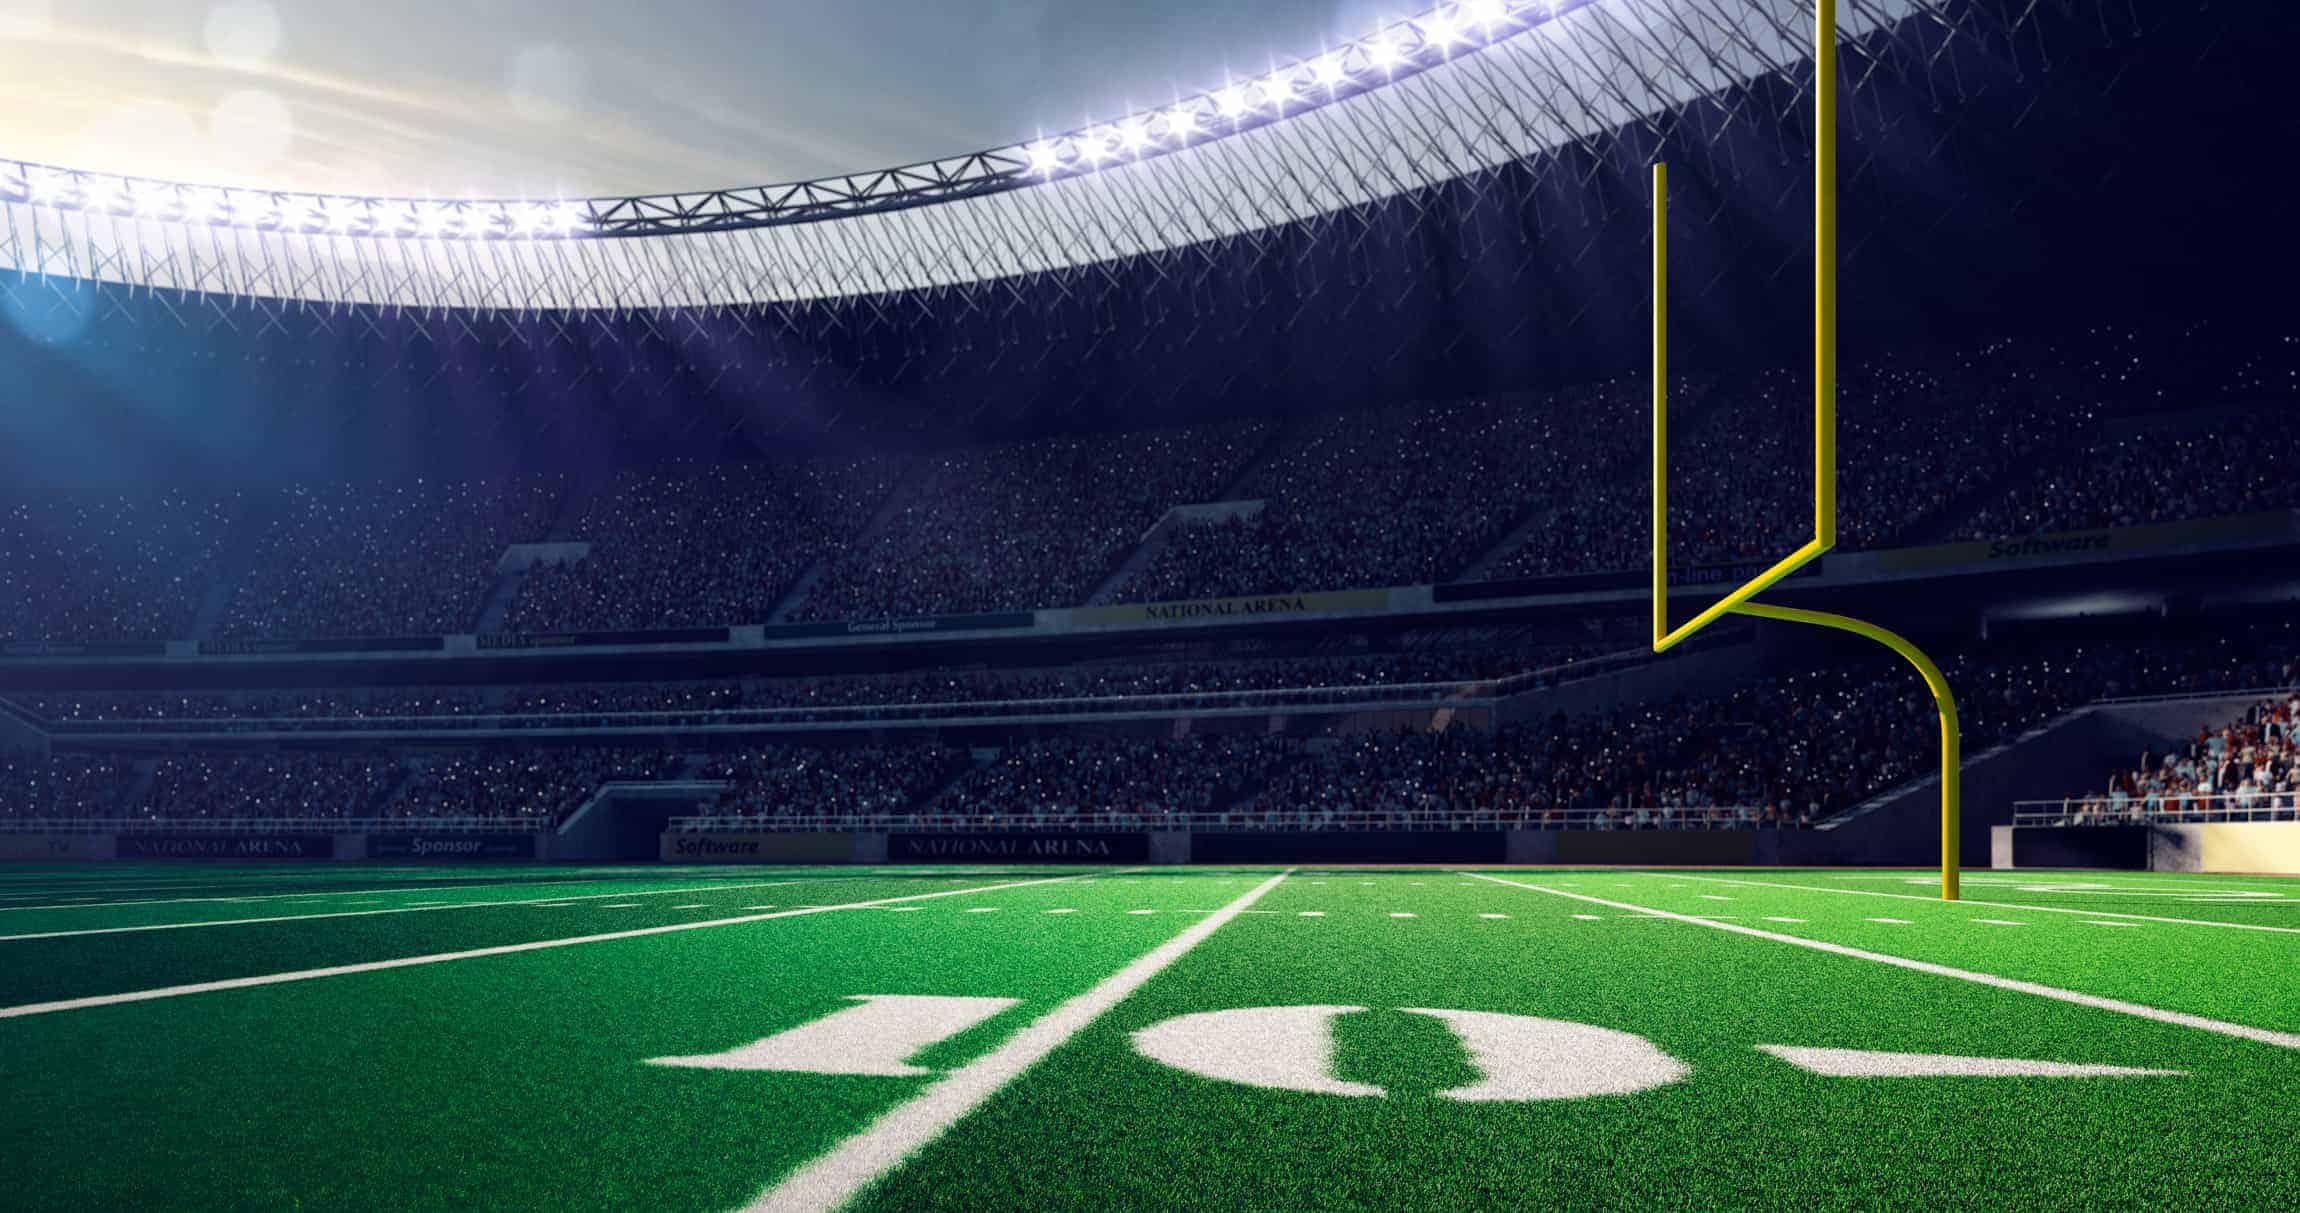 Philadelphia Eagles' Stadium Is Becoming Energy Self-Sufficient